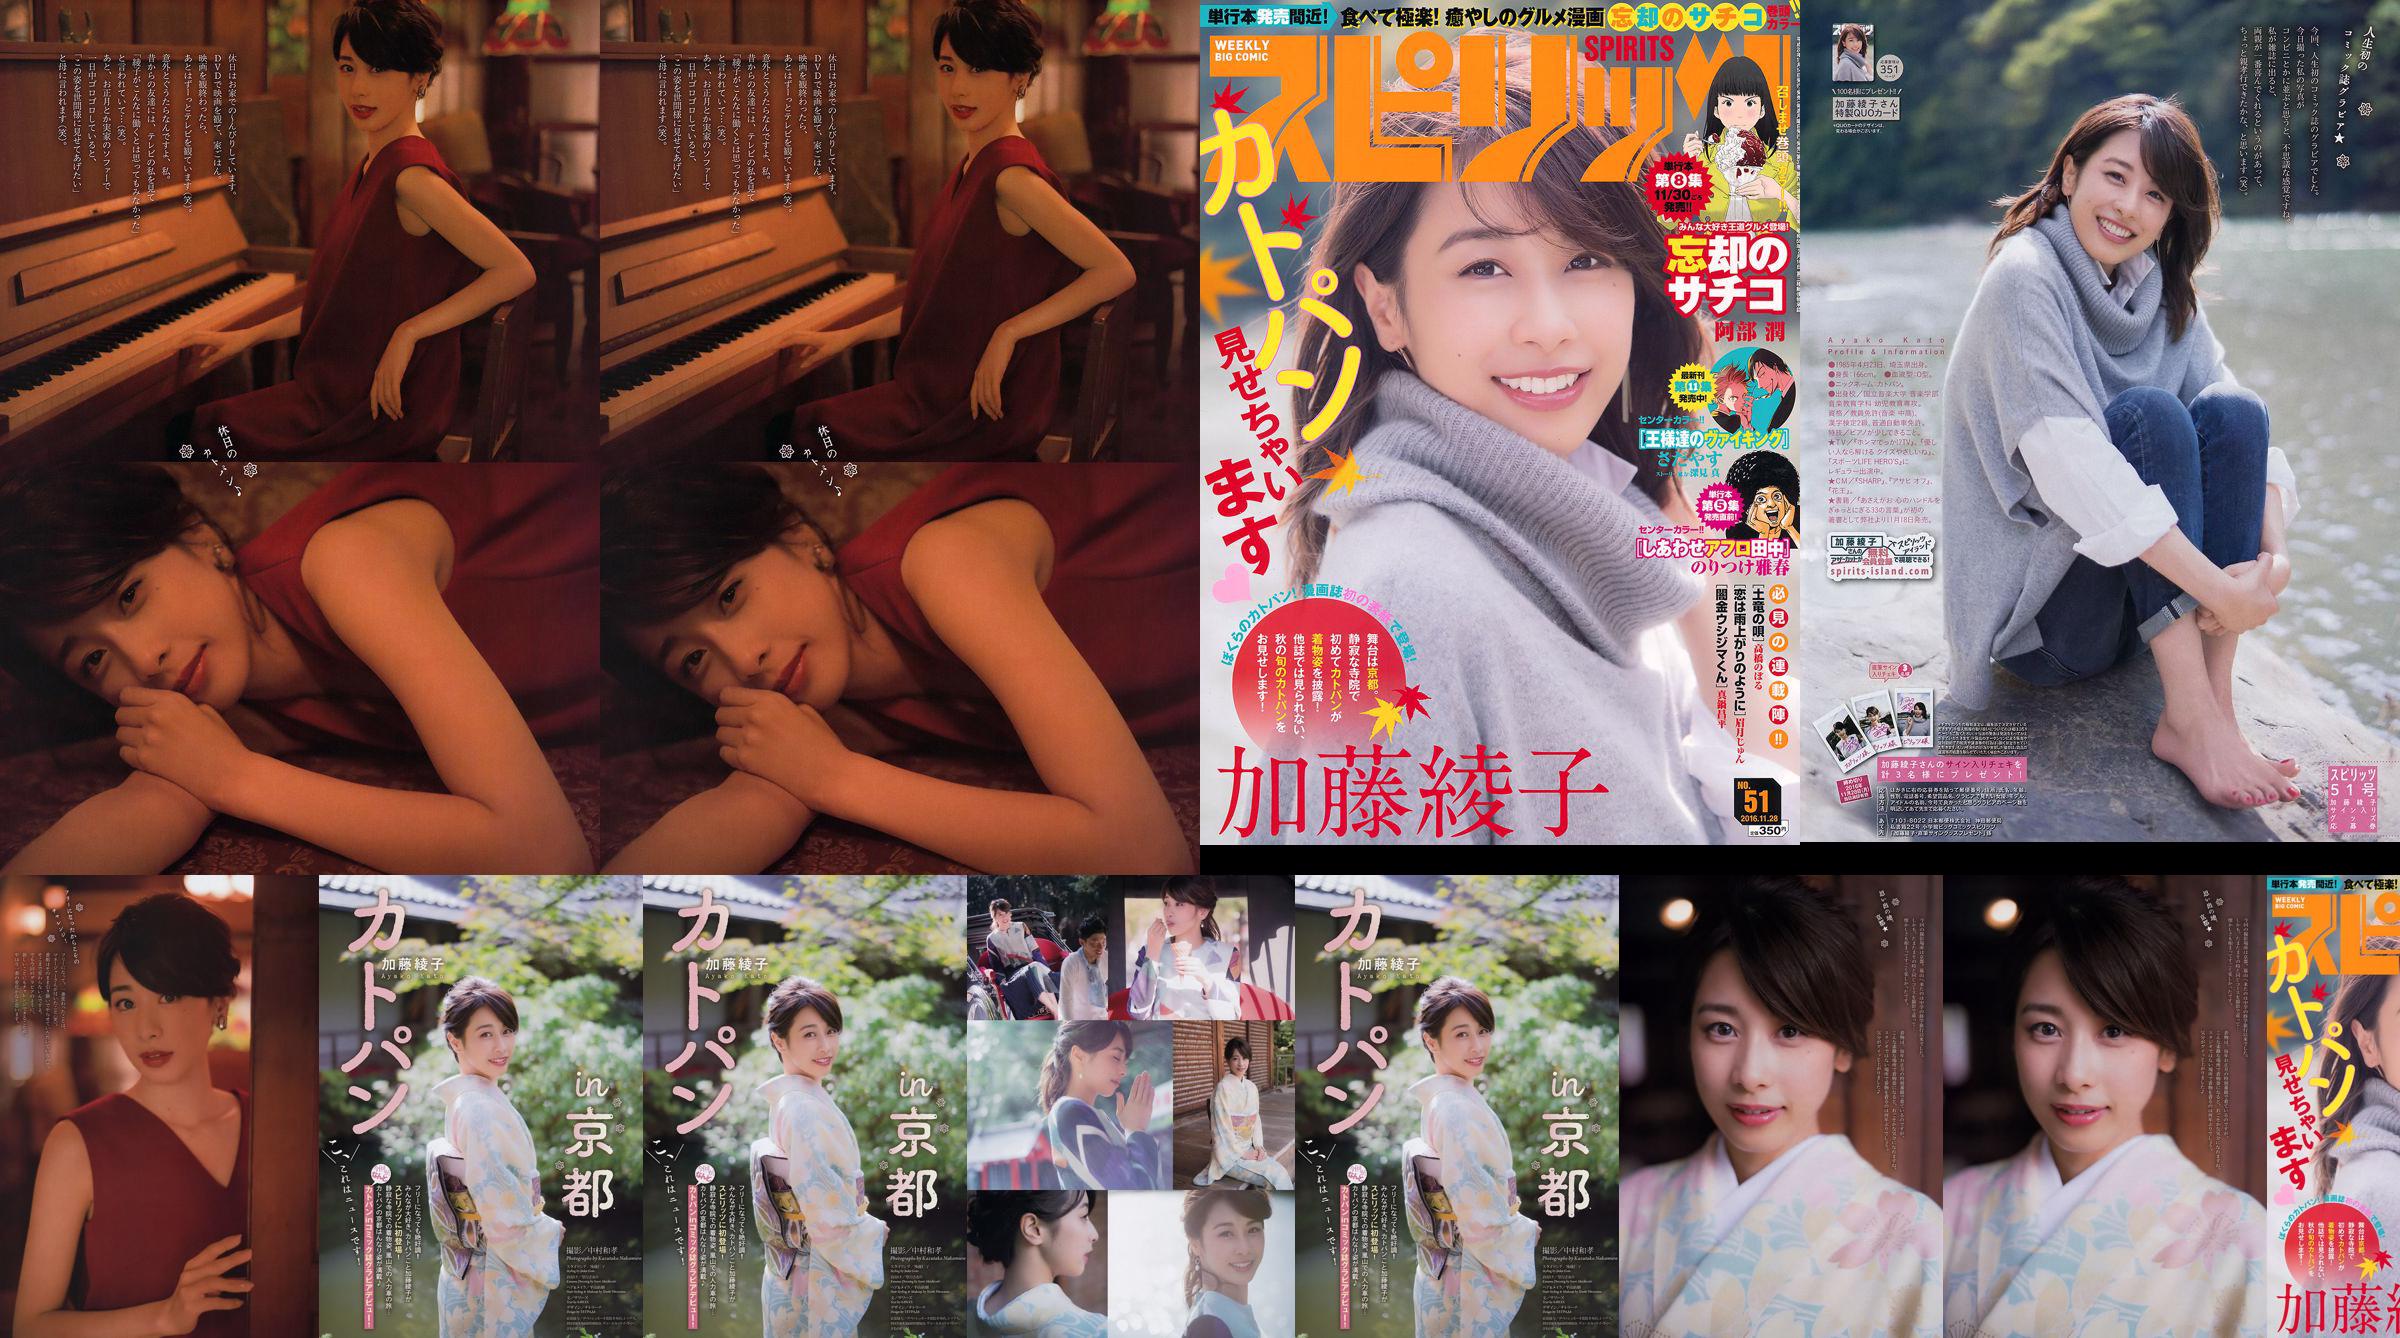 [Semangat Komik Besar Mingguan] Ayako Kato 2016 Majalah Foto No. 51 No.7d2bef Halaman 3